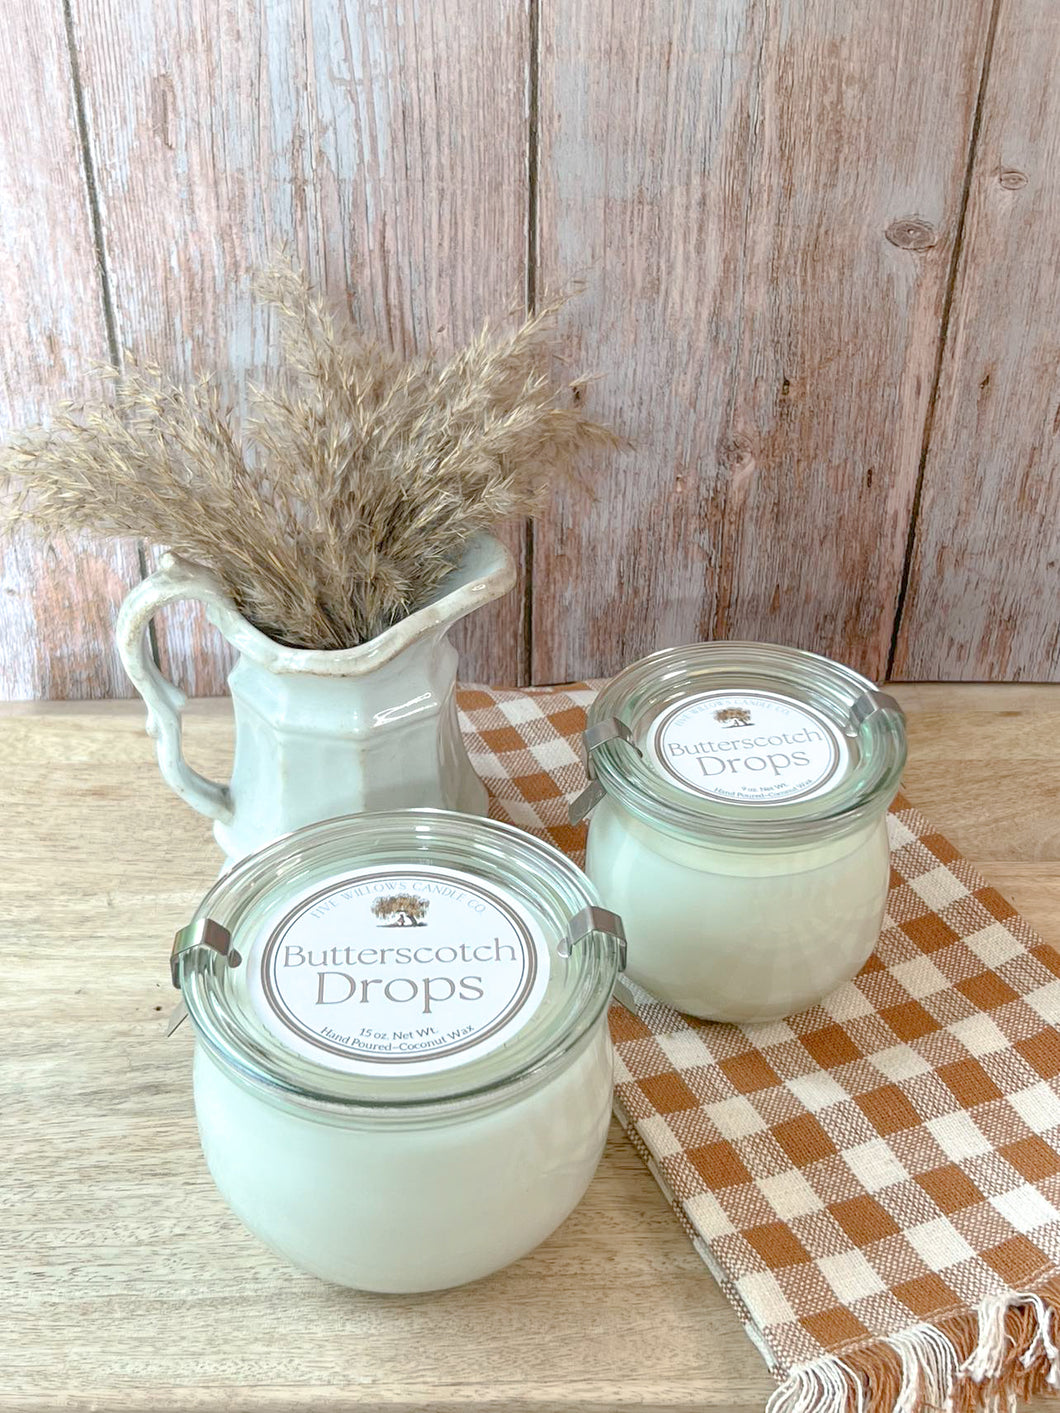 Butterscotch Drops 9 oz. European Preserve Jar